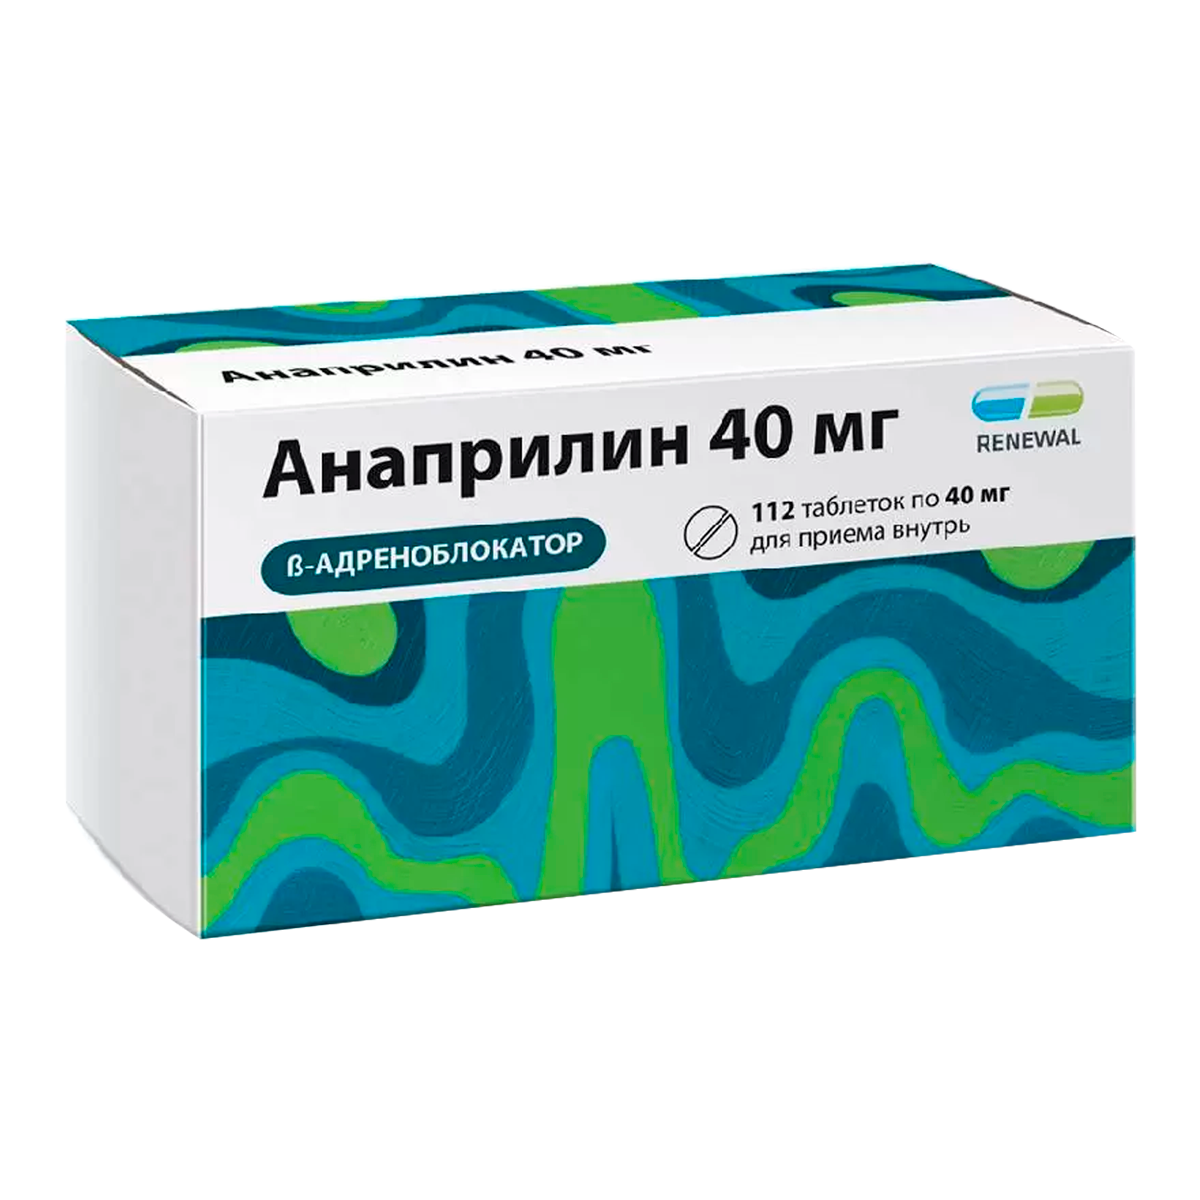 Анаприлин отзывы врачей. Анаприлин реневал 10 мг. Таблетки анаприлин реневал. Анаприлин 40 реневал. Анаприлин таблетки 10 мг.